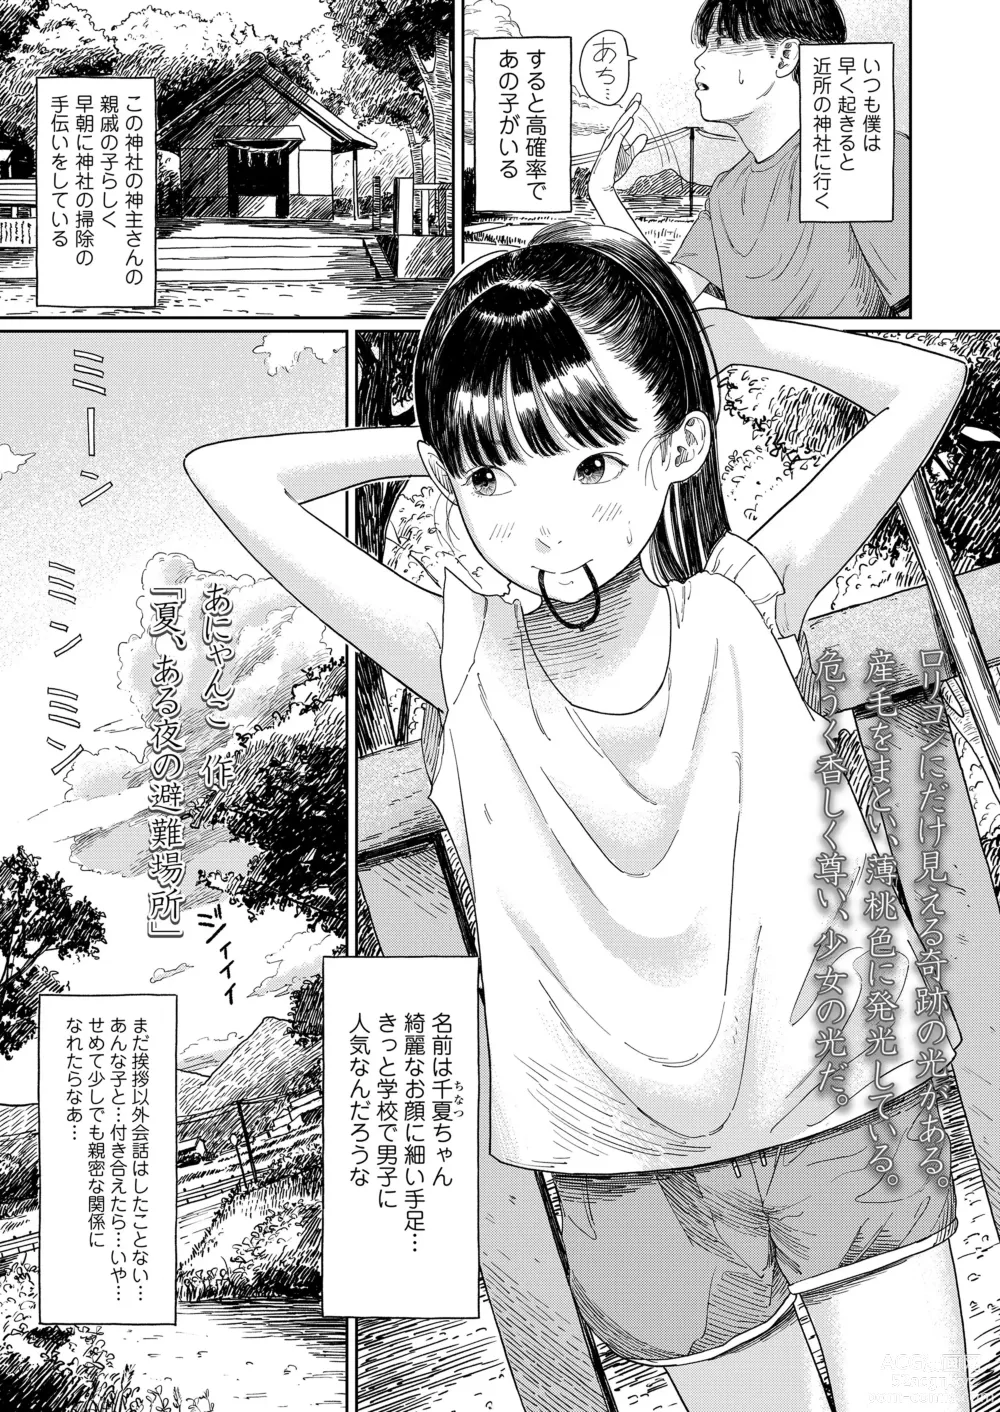 Page 3 of manga COMIC LOE VOL.4 NEXT